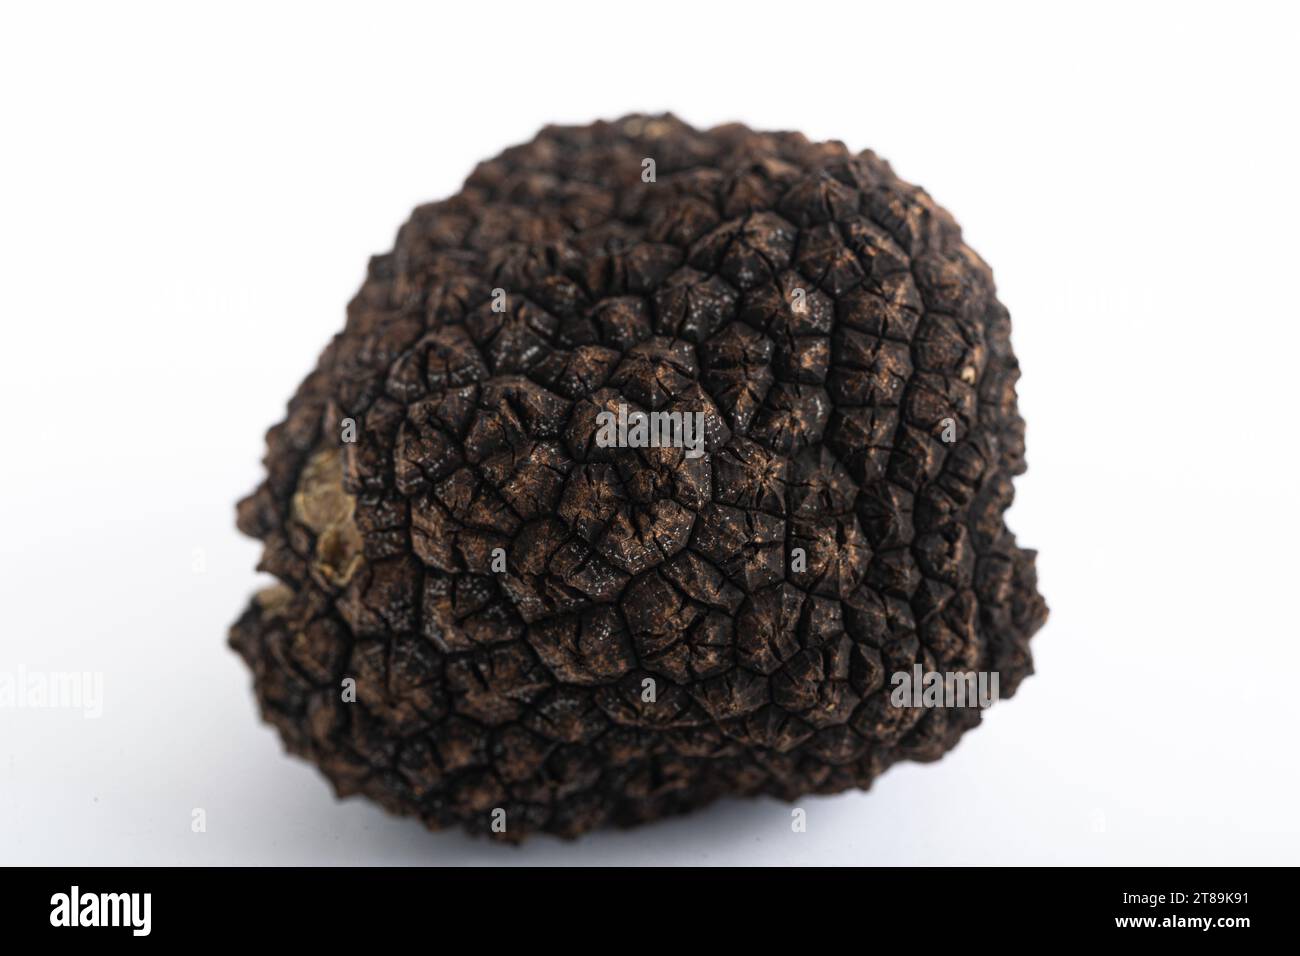 Black Truffle on a White Background Stock Photo